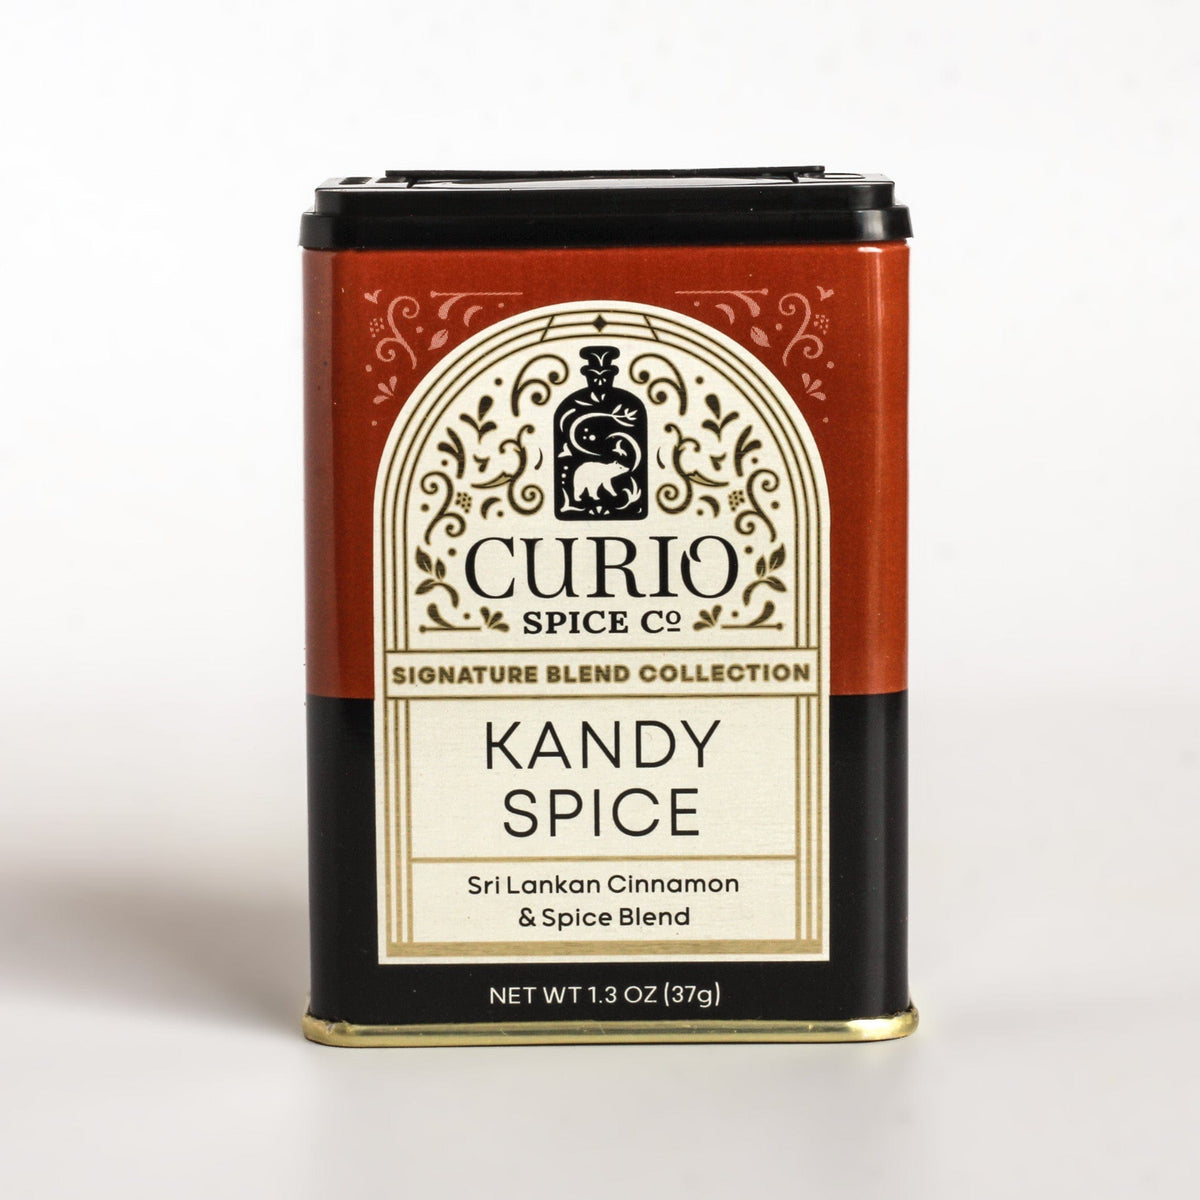 Curio Spice Co Kandy Spice